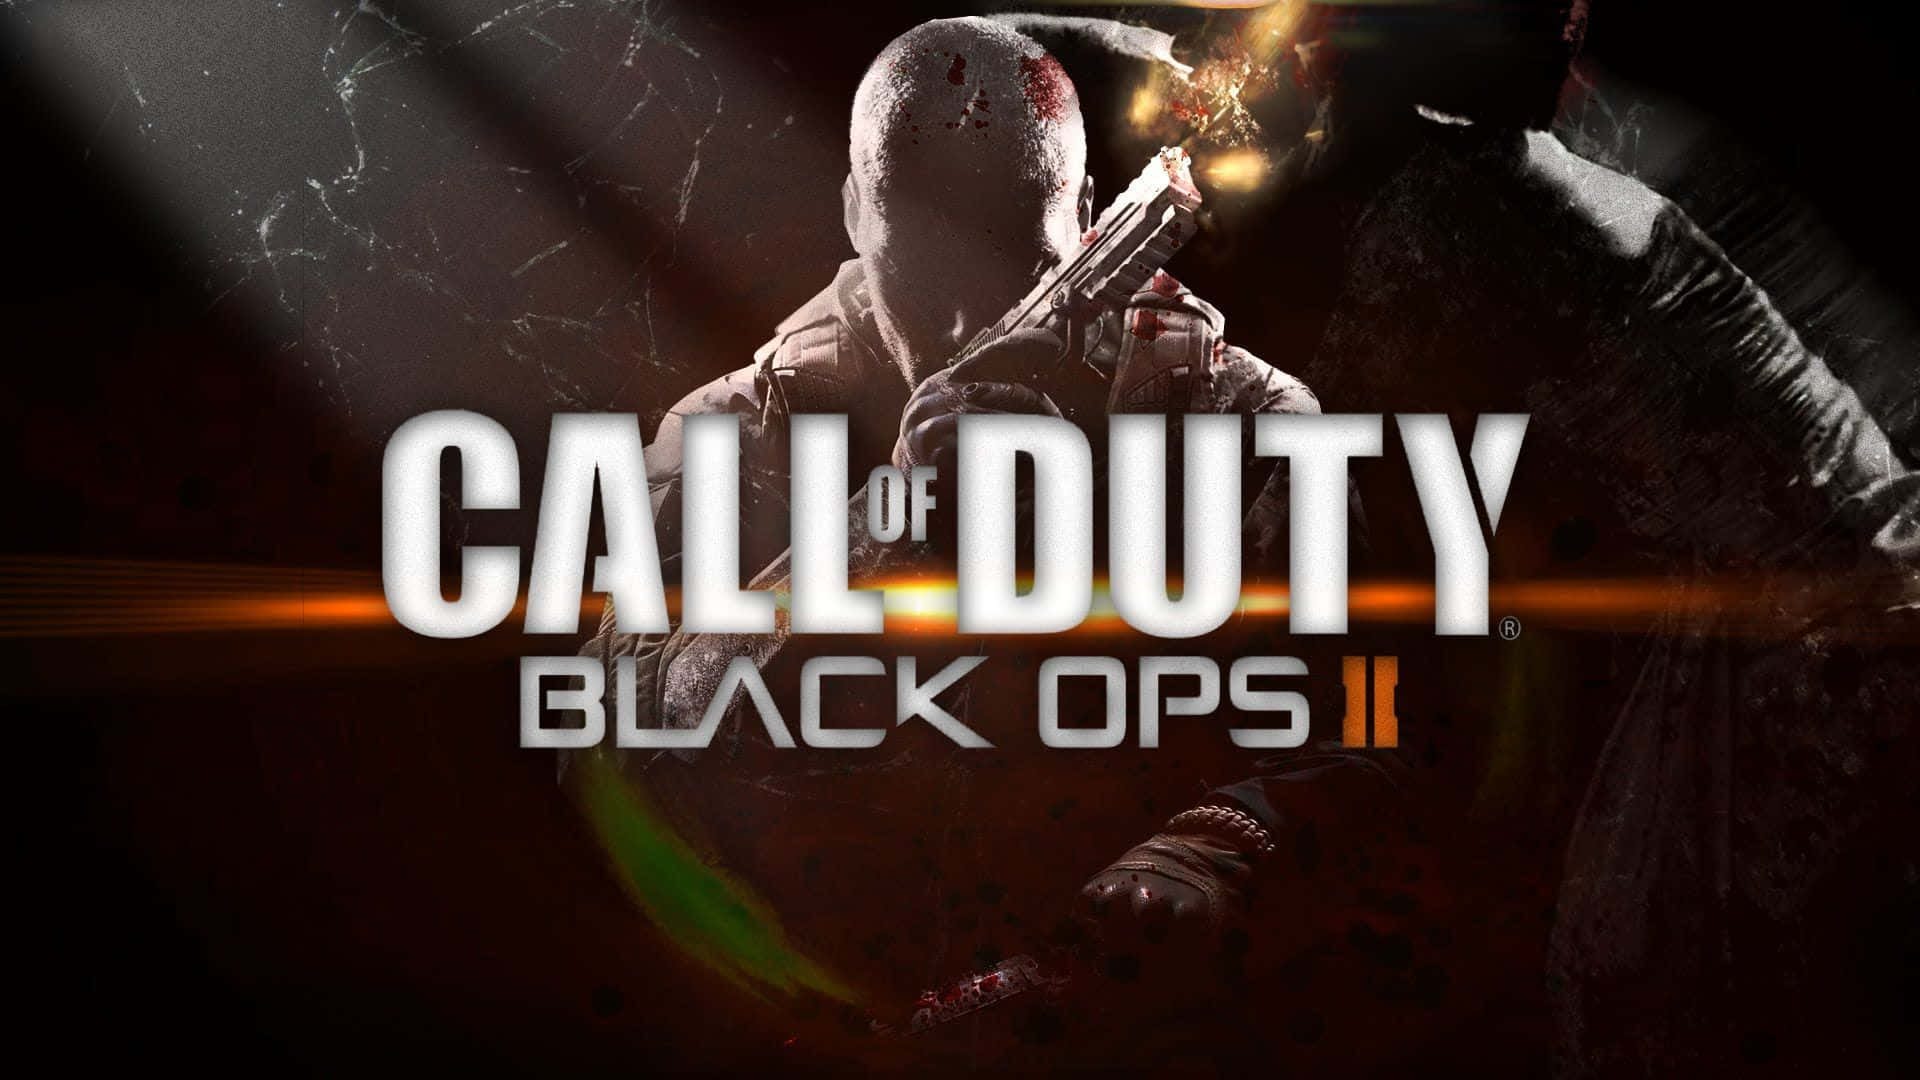 Incall Of Duty: Black Ops Ii Kämpfen Wir Gegeneinander. Wallpaper